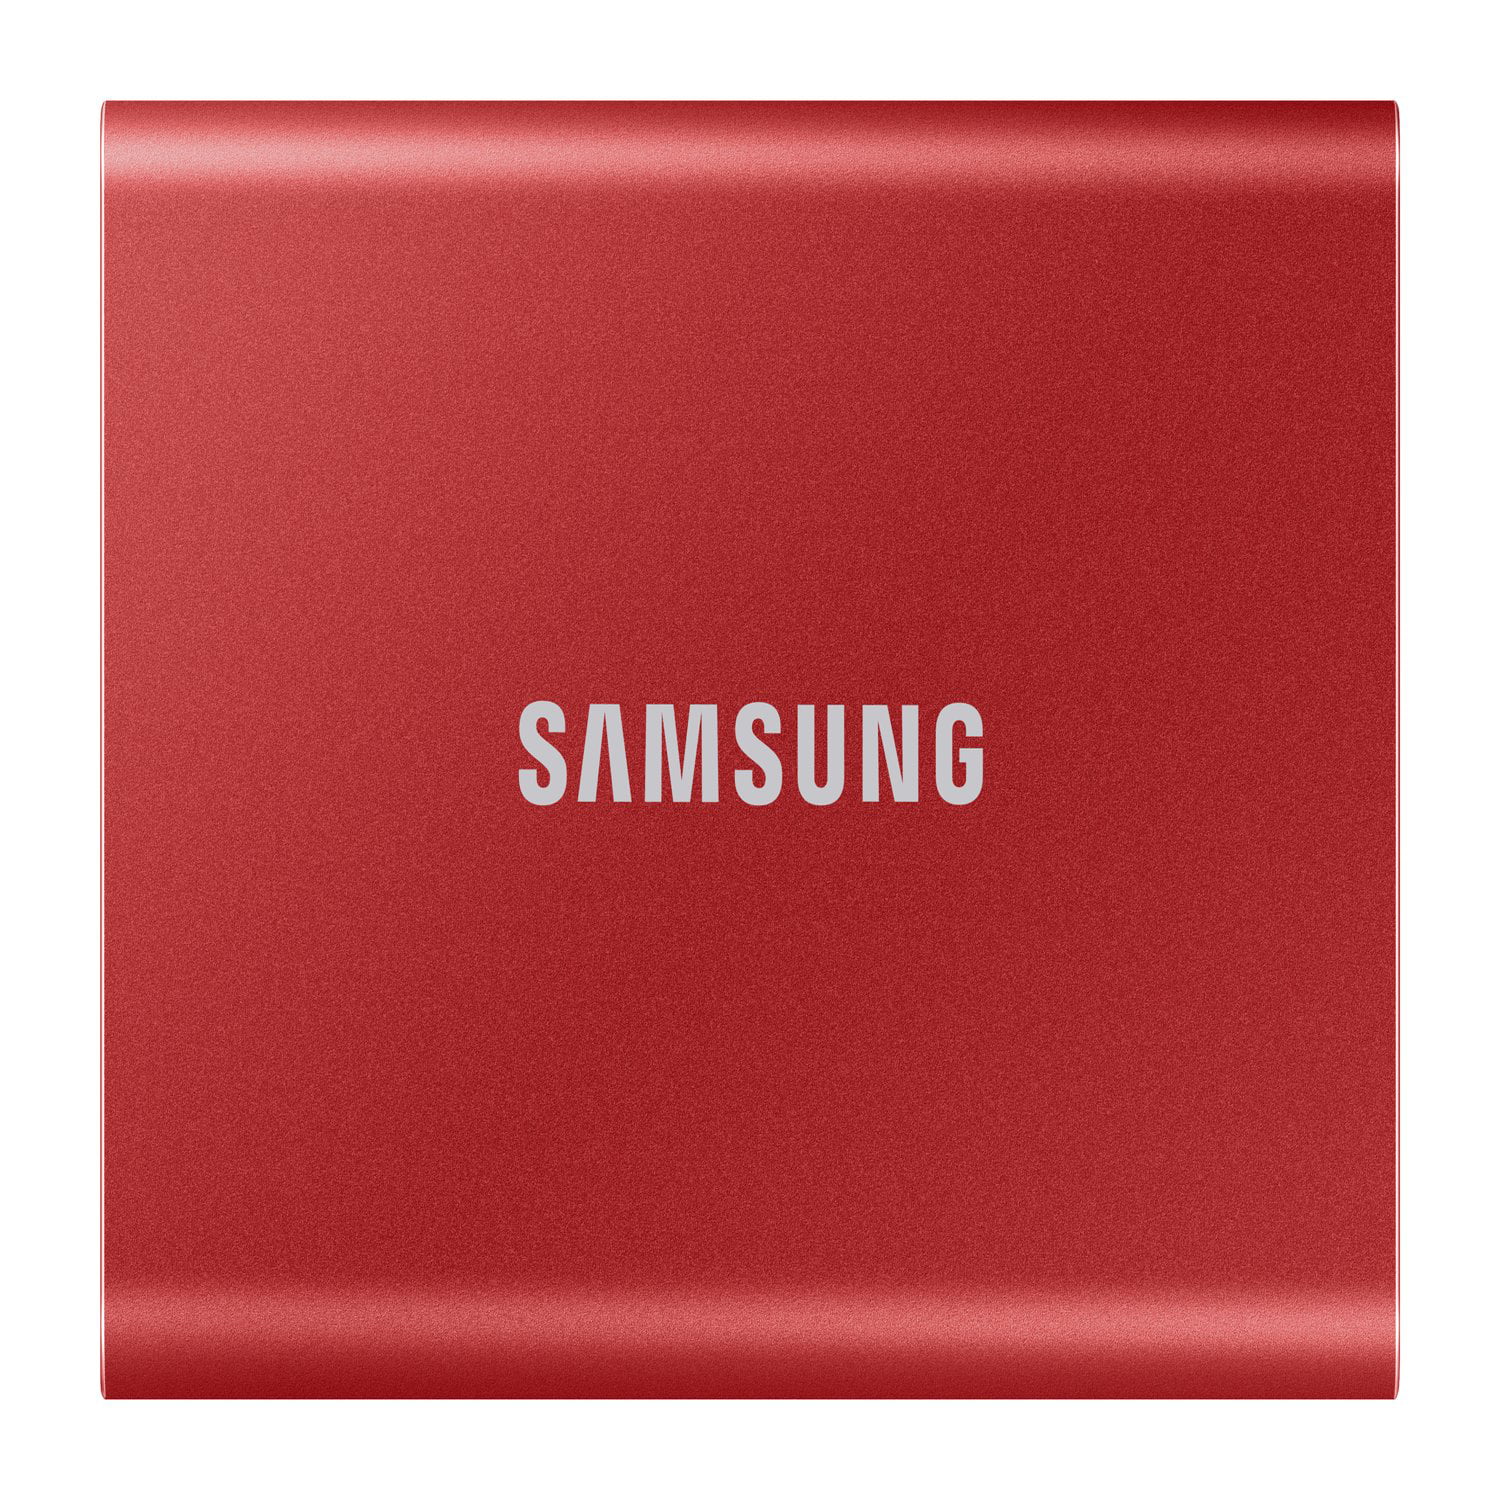 Samsung Portable SSD T7 500GB USB 3.2 External - Red $59 + Free Shipping